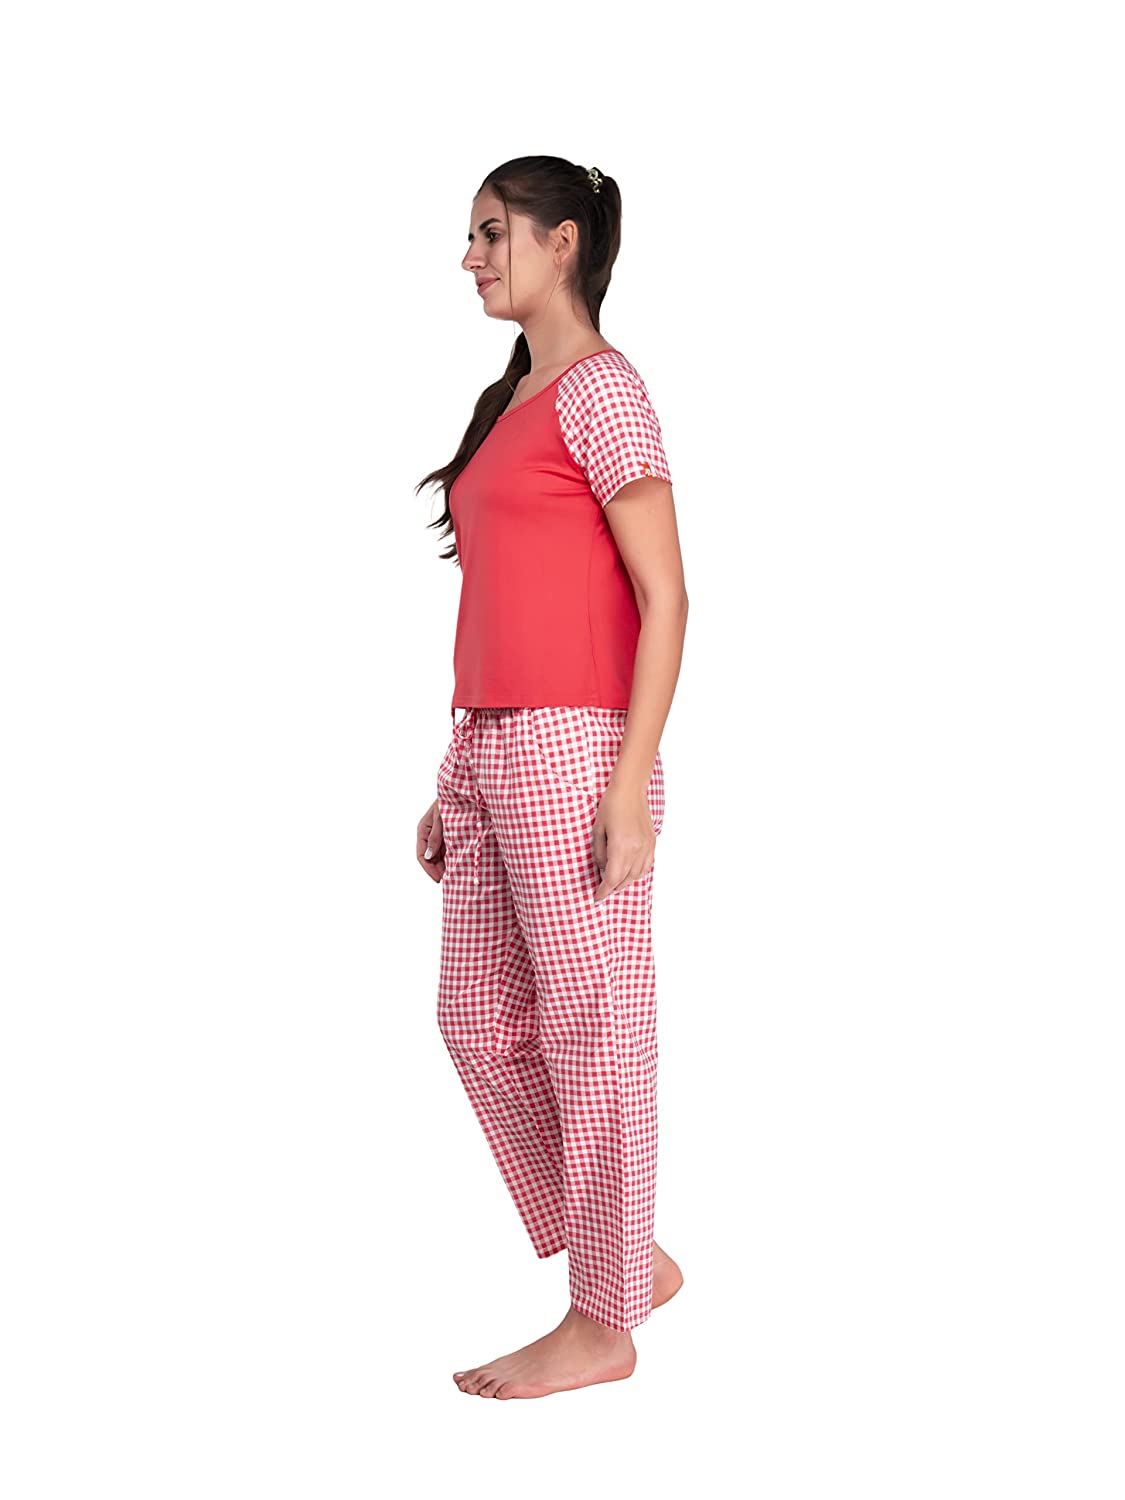 Evolove Womens 100% Cotton Pyjama Set with Round Neck Reglan Half Sleeve Checks Printed Super Soft Top or Tshirts & Bottoms Pants Regular Night Suit Sleep & Lounge Wear (S to 2XL Size)